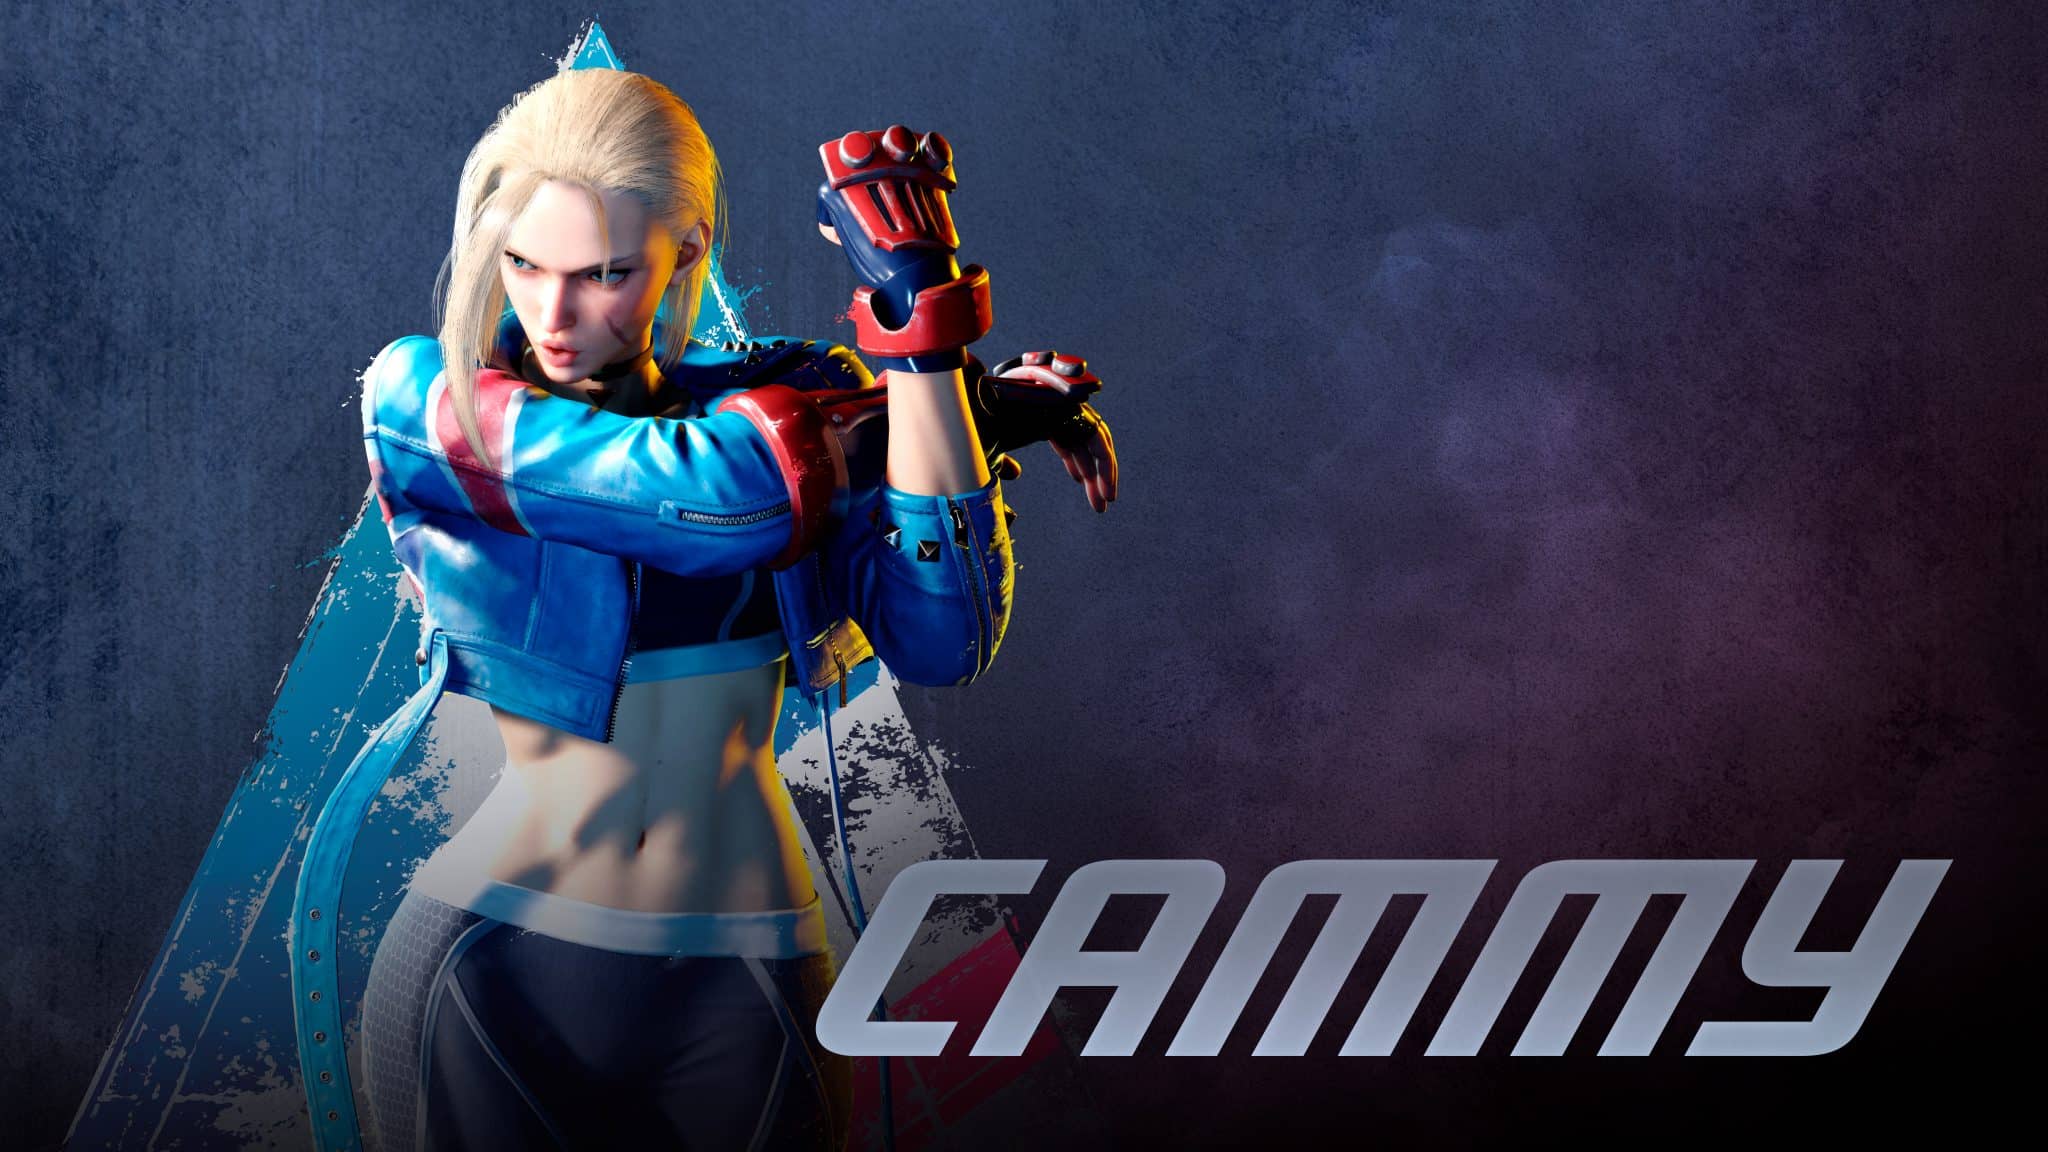 Street Fighter 6 - Trailer de gameplay - Zangief, Lily e Cammy